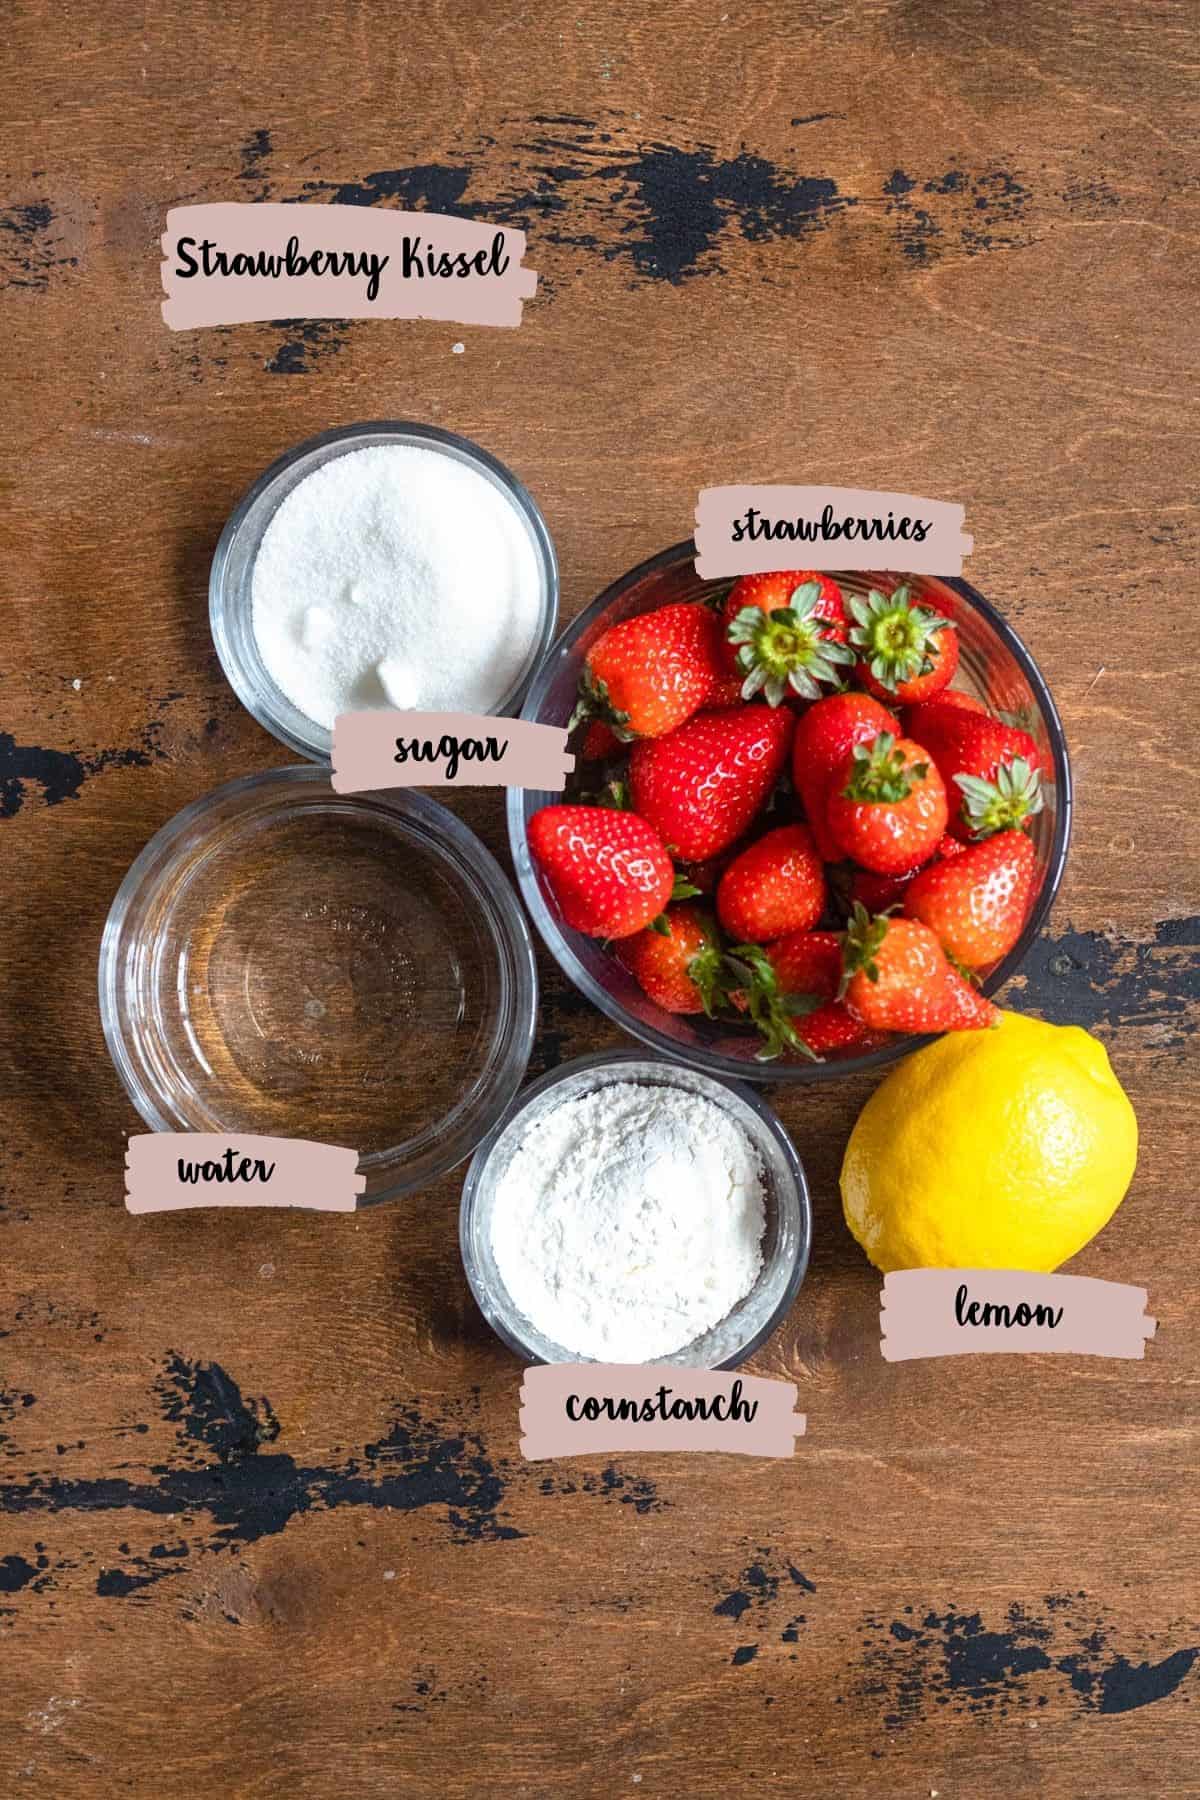 Measured ingredients to make strawberry kissel. 